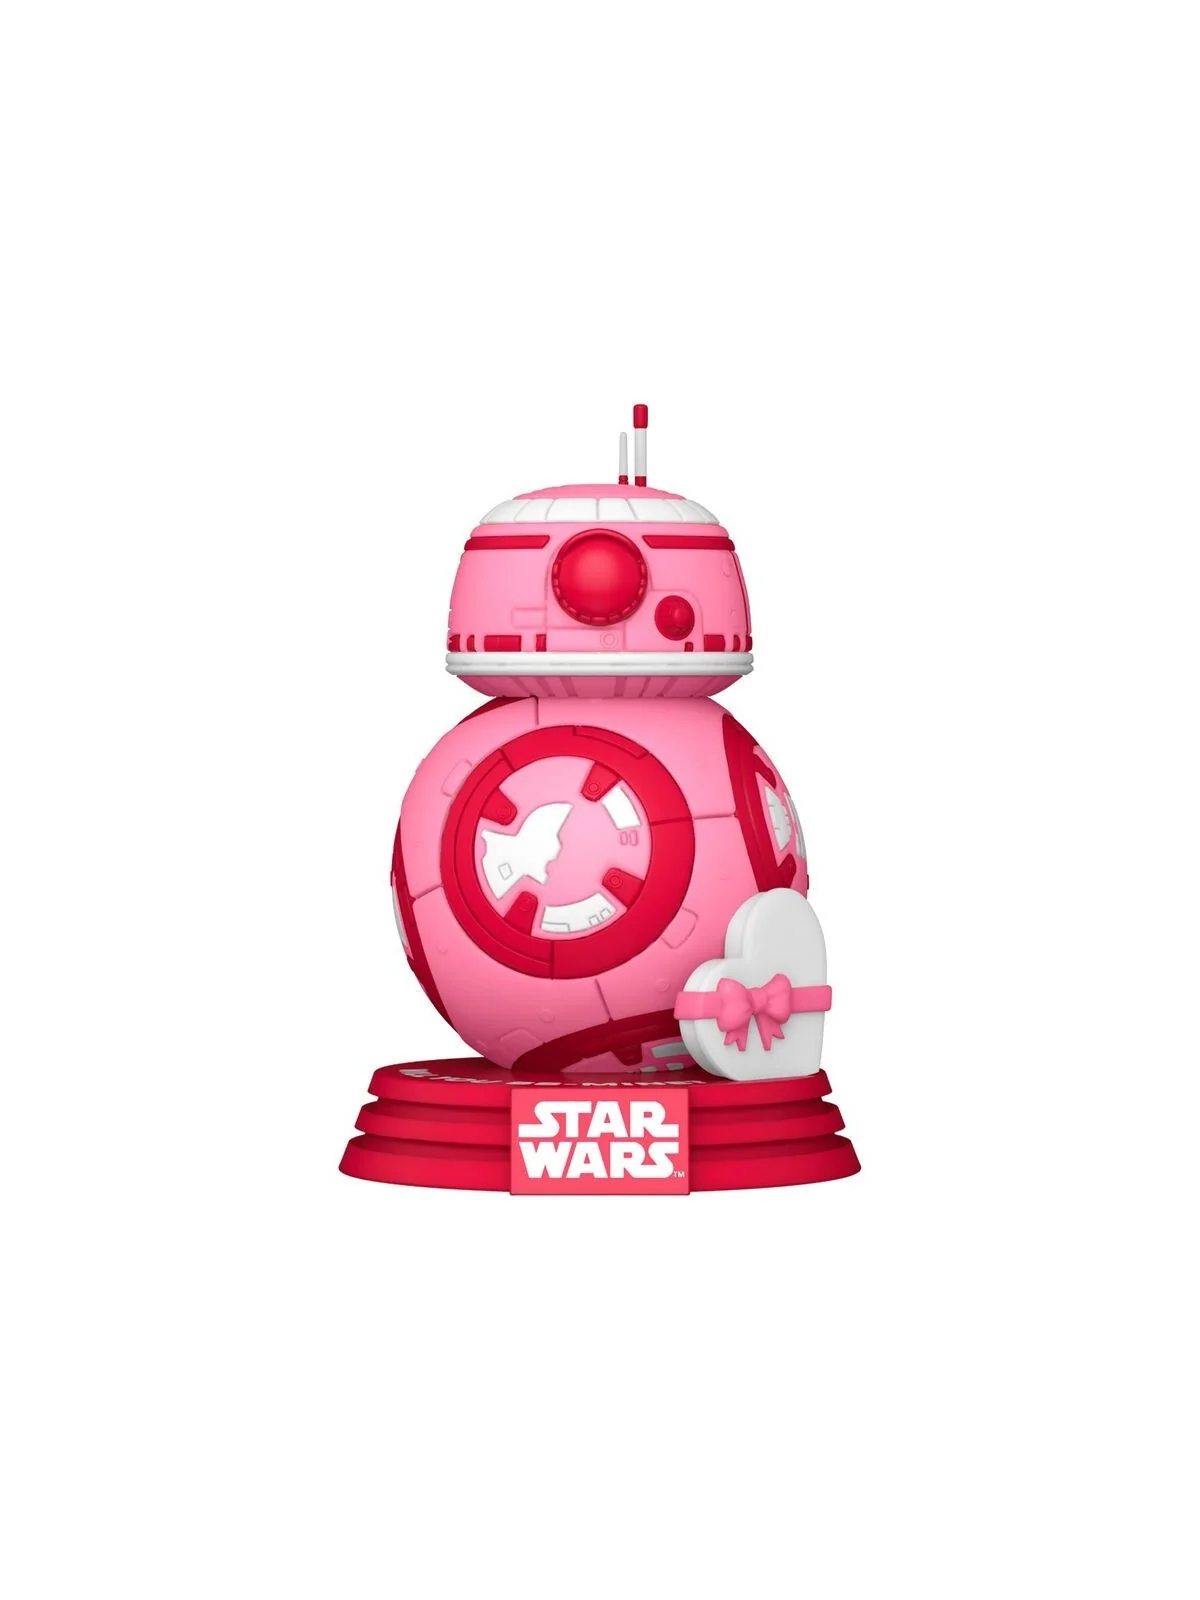 Comprar Funko POP! Star Wars Valentines BB-8 (590) barato al mejor pre